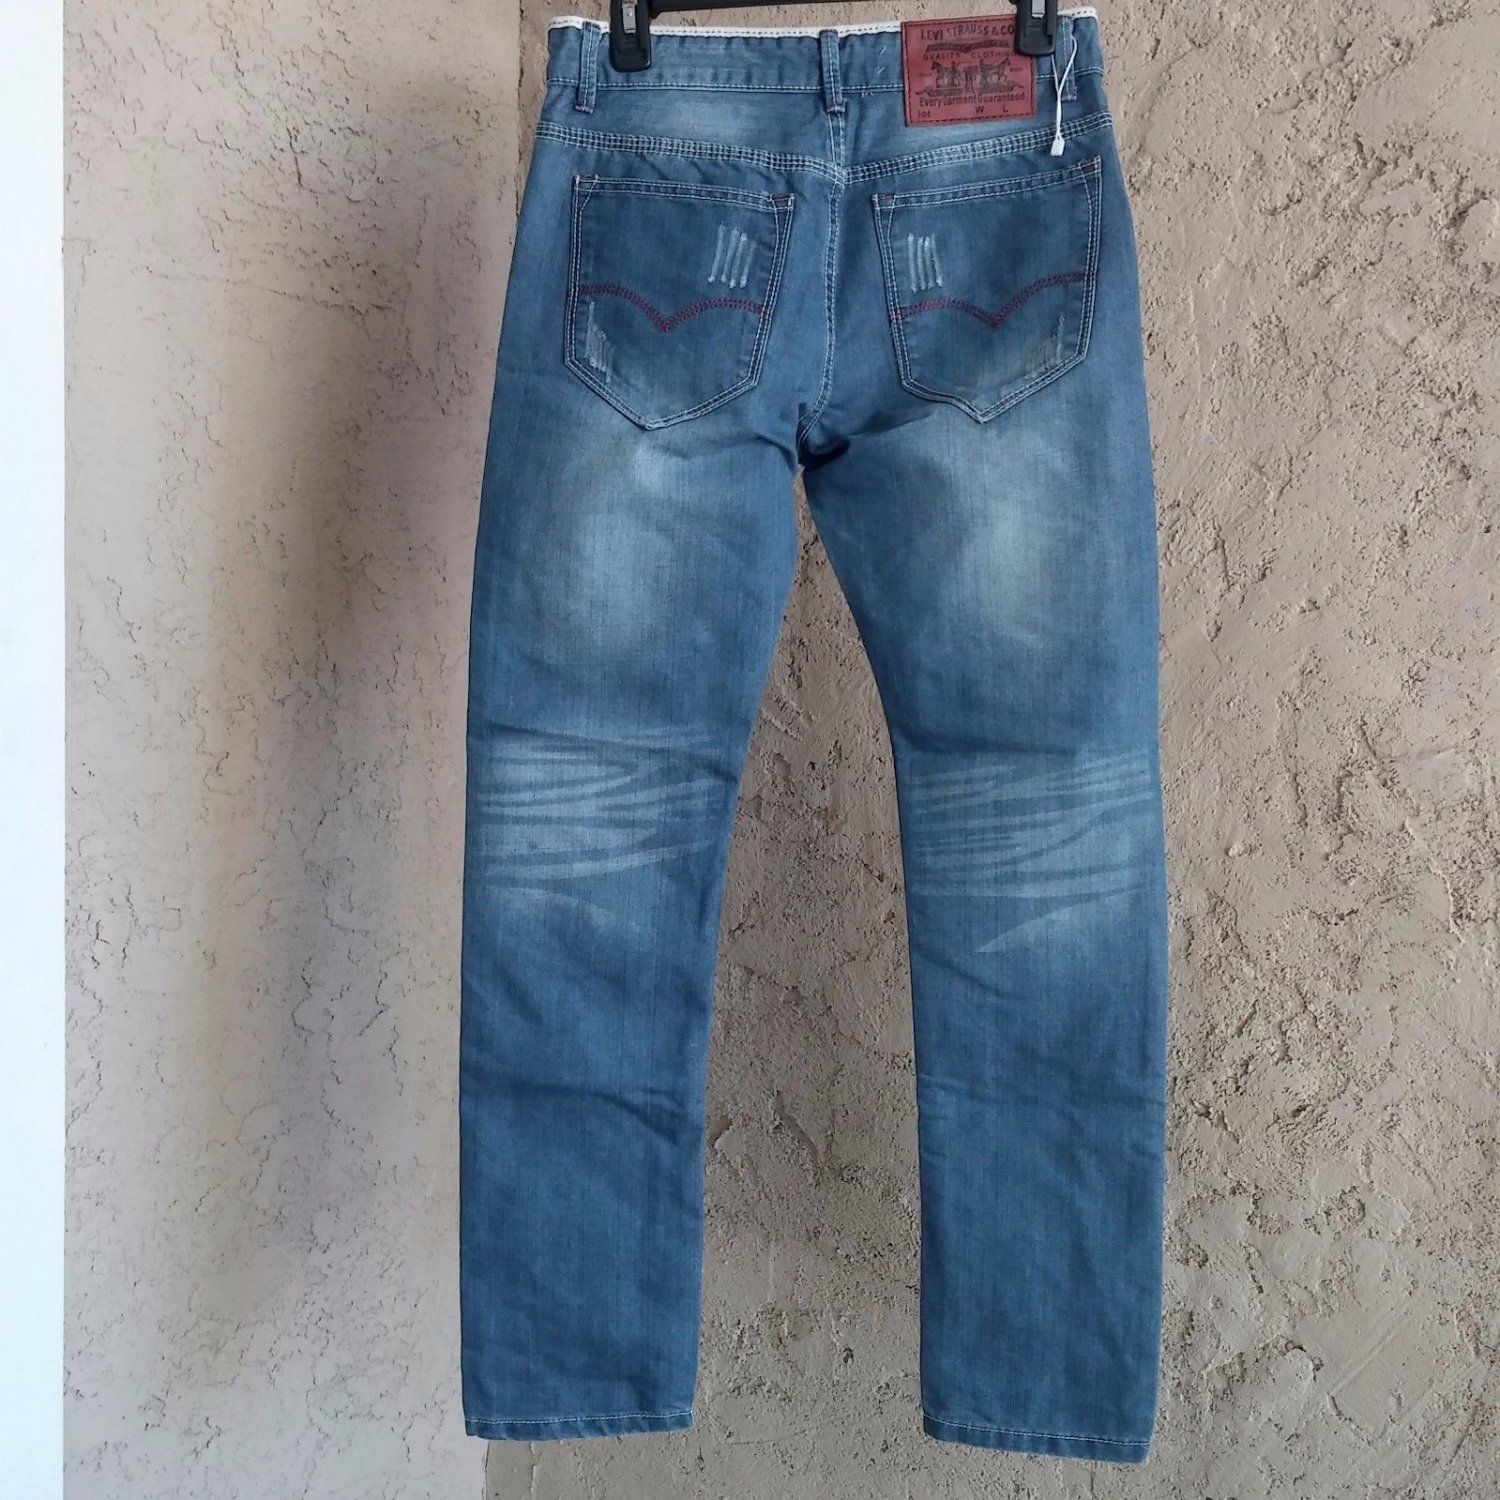 LEVI'S Slim Fit Men's Jeans Size 31 x 30 Size Run Small (W30